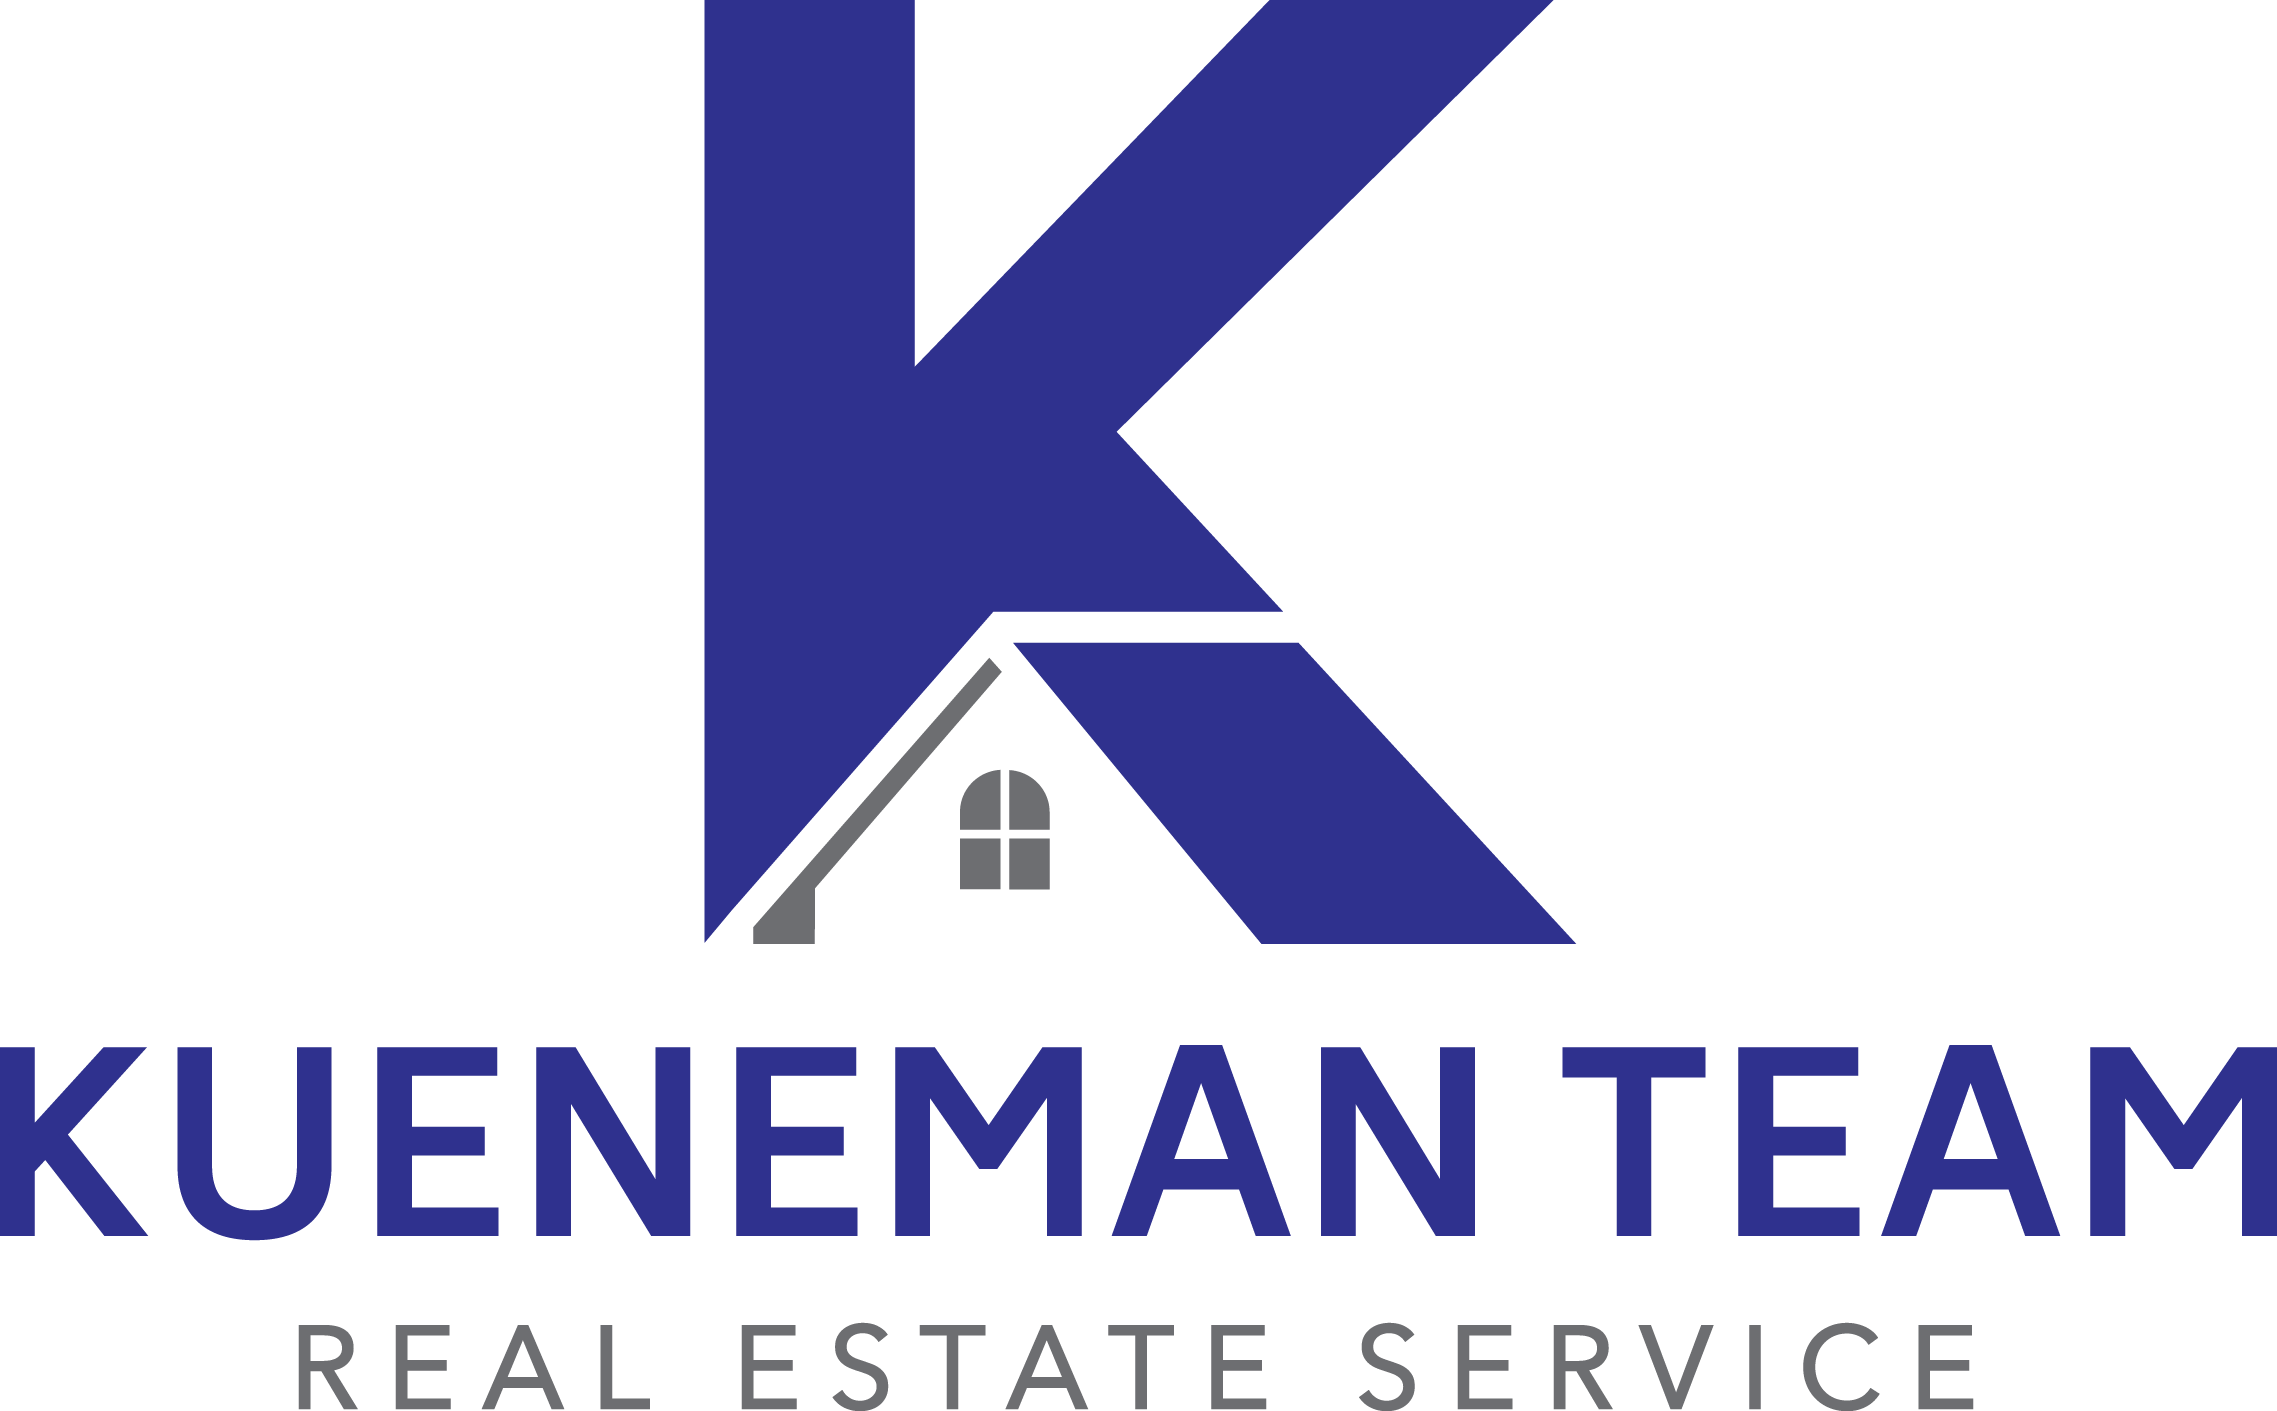 Kueneman Team Real Estate 